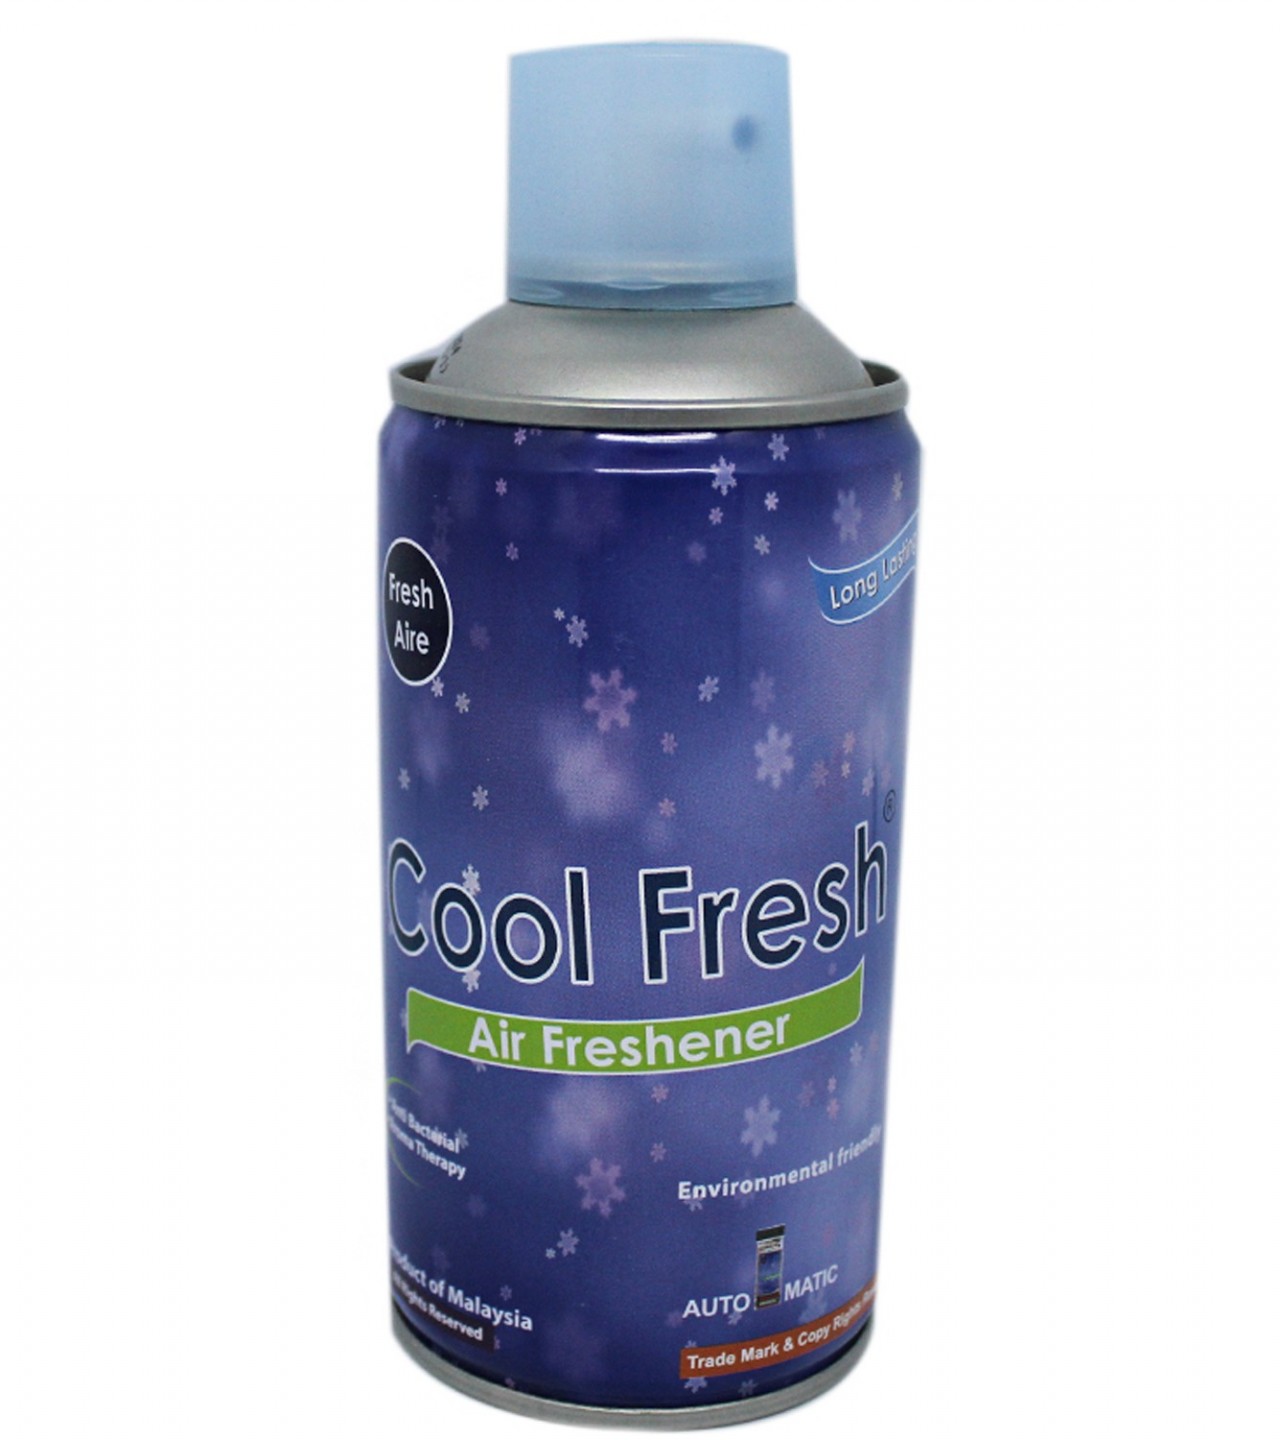 Automatic Air Freshener Dispenser with Free Air Freshener 300 ml Bottle - White